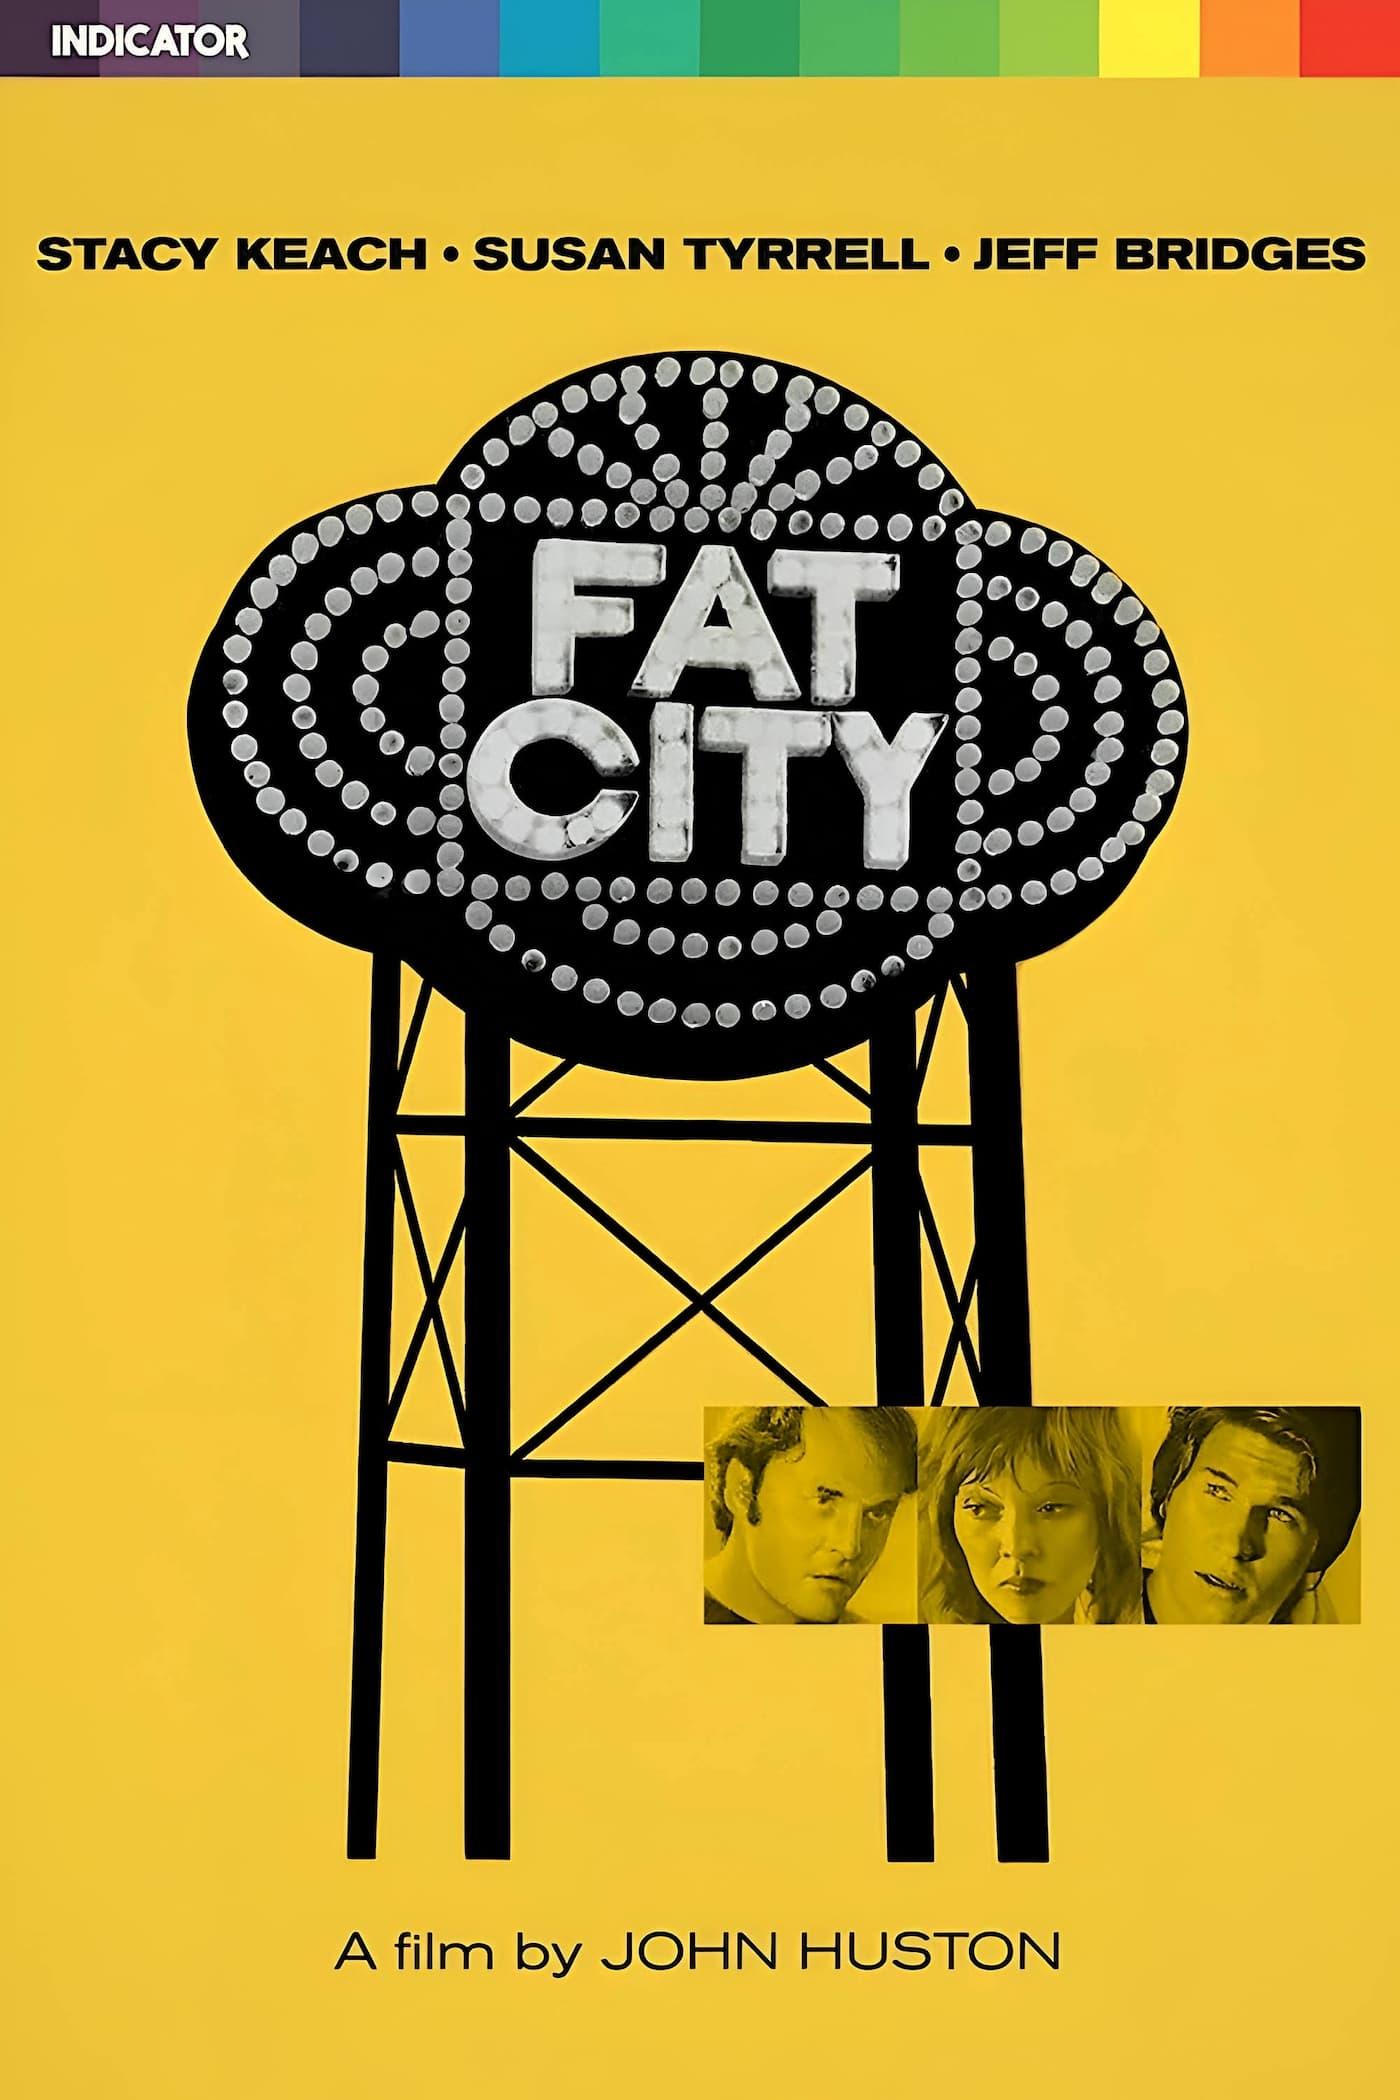 Fat City poster